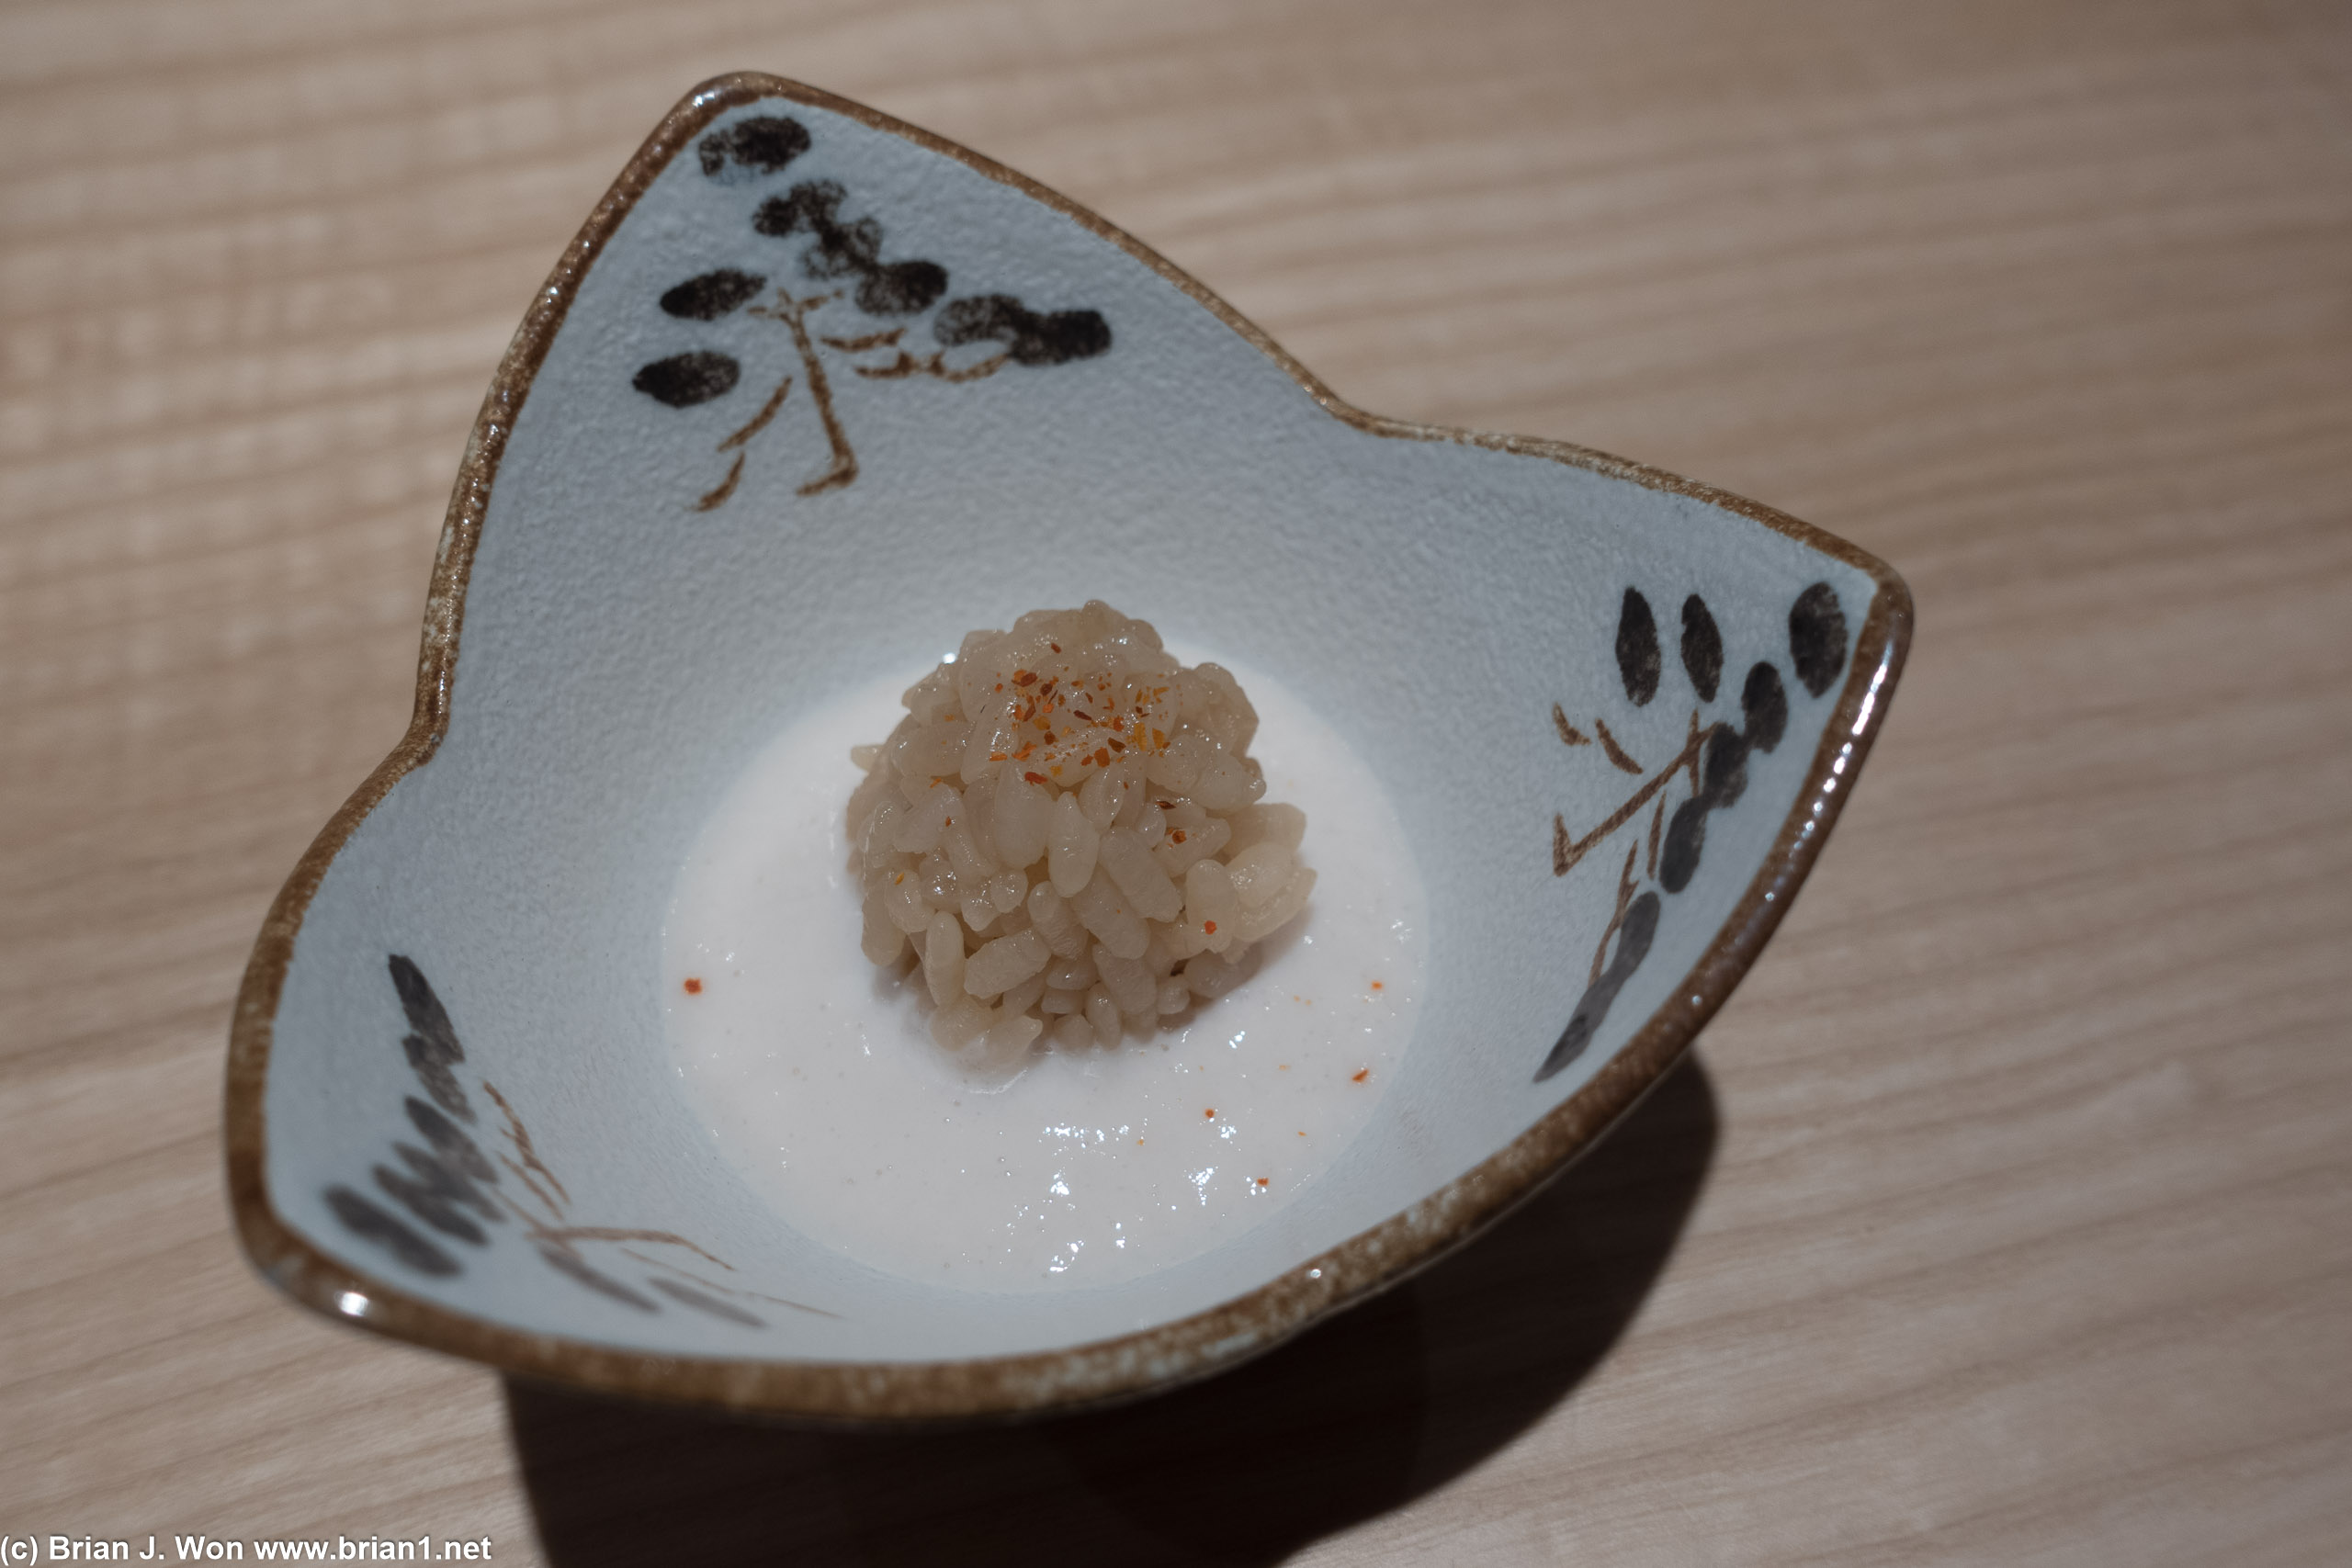 Shirako and rice (milt, aka sperm sac of cod).